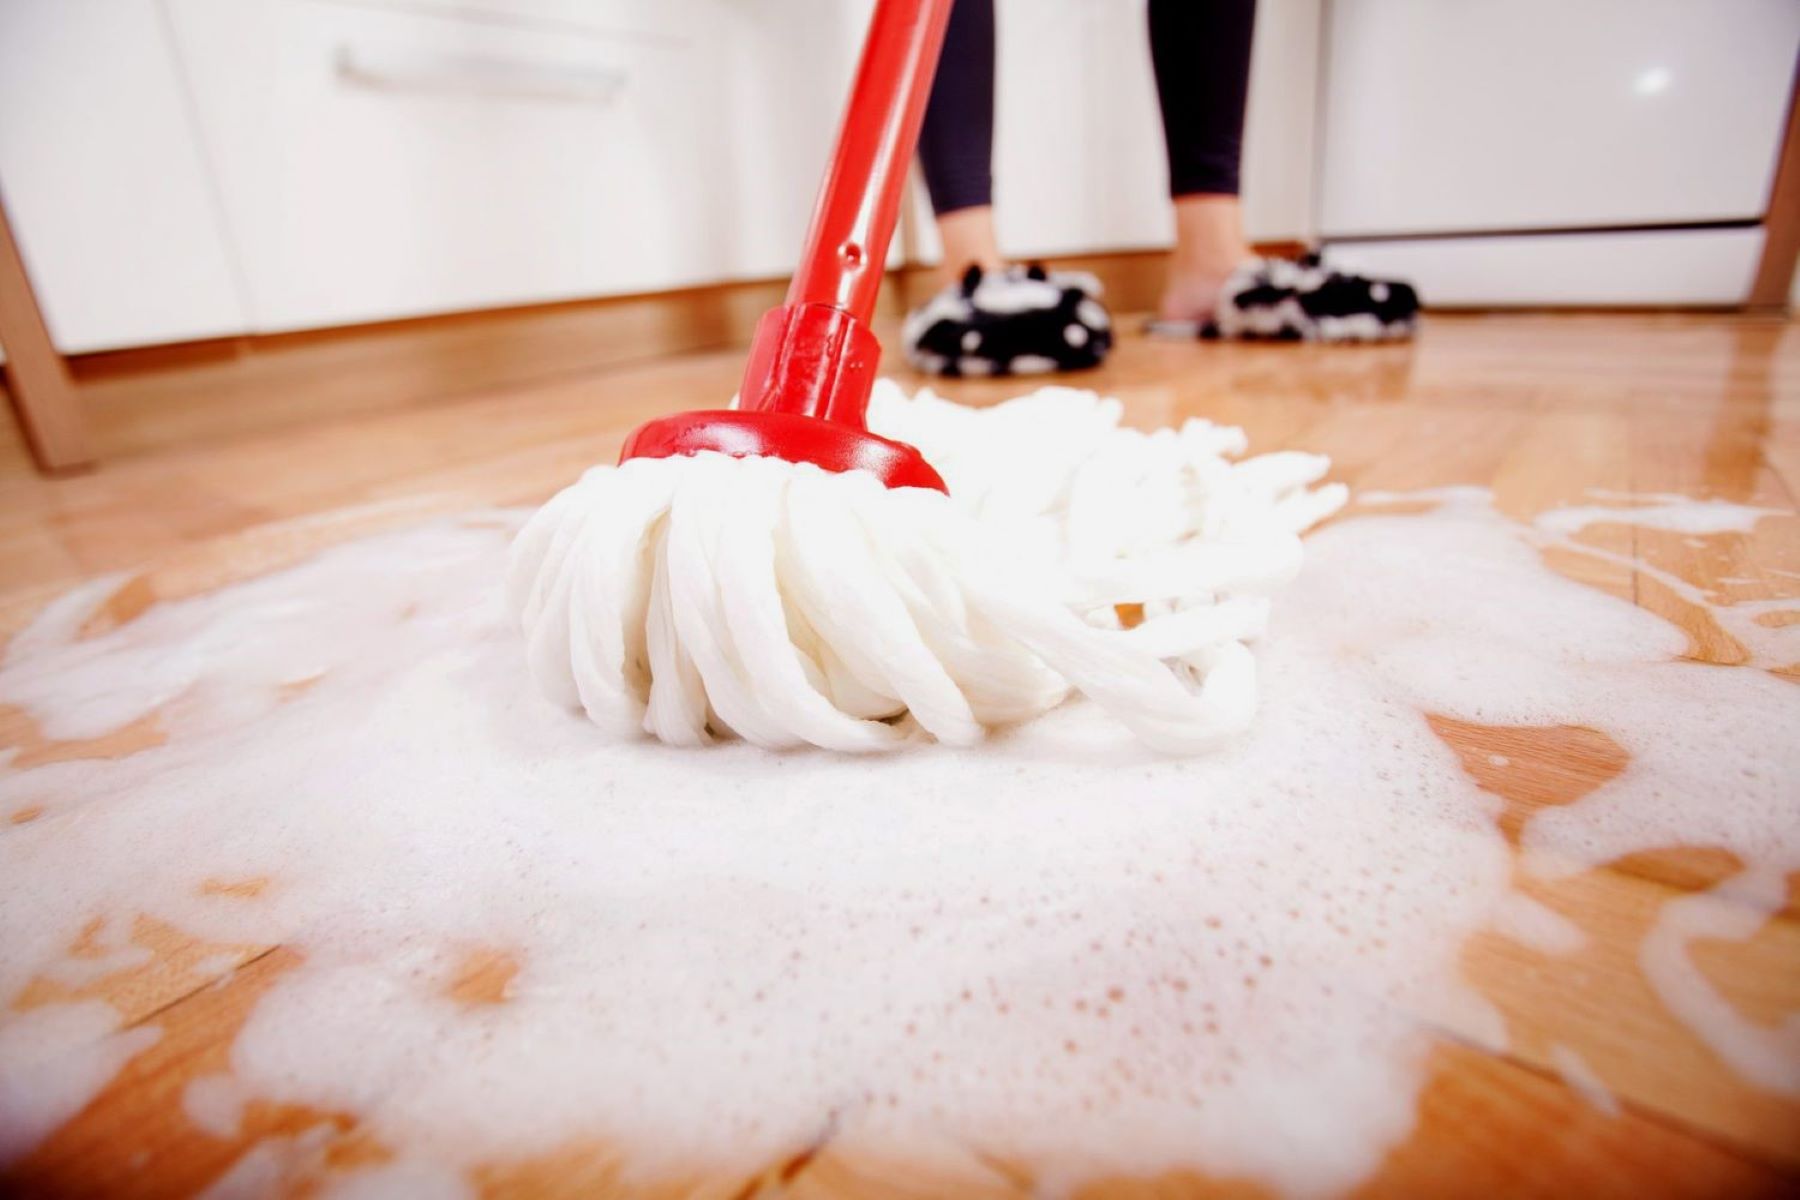 How To Mop An Oily Floor